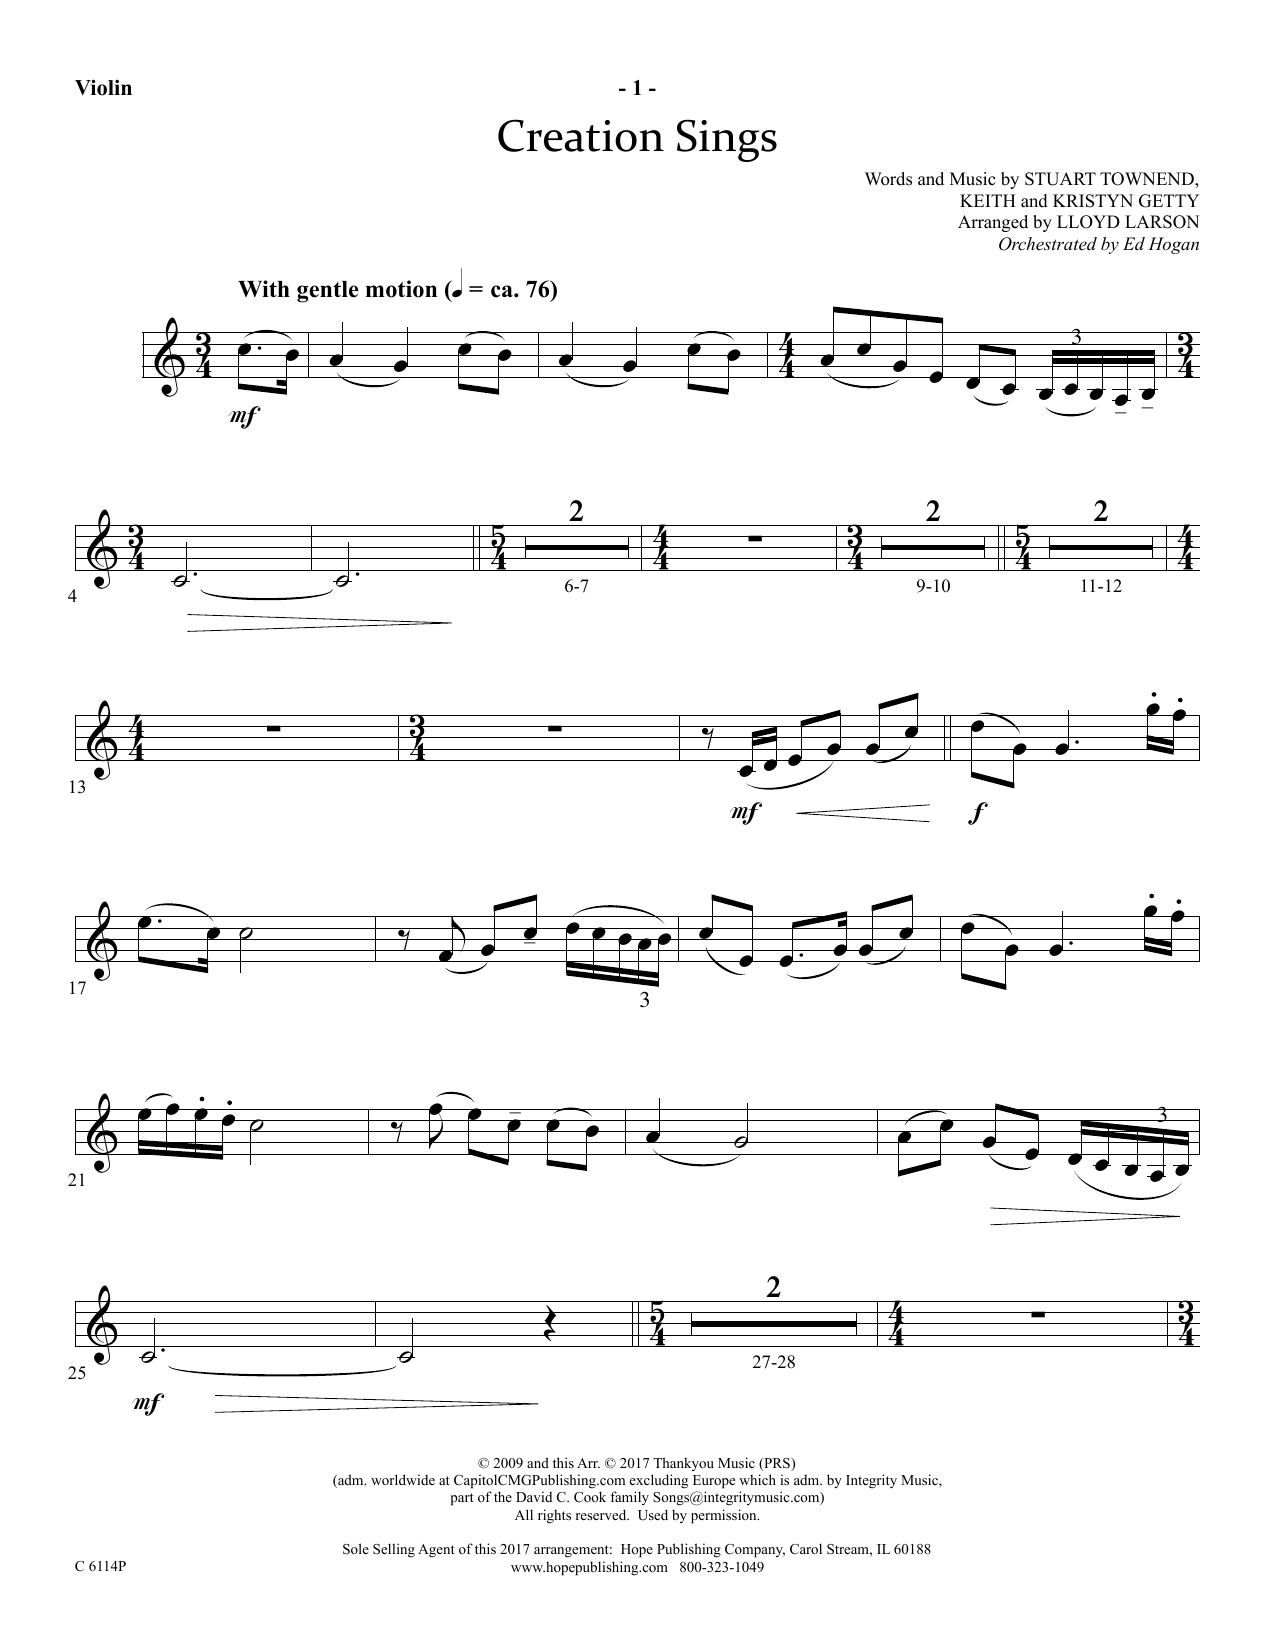 Lloyd Larson Creation Sings - Violin Sheet Music Notes & Chords for Choir Instrumental Pak - Download or Print PDF